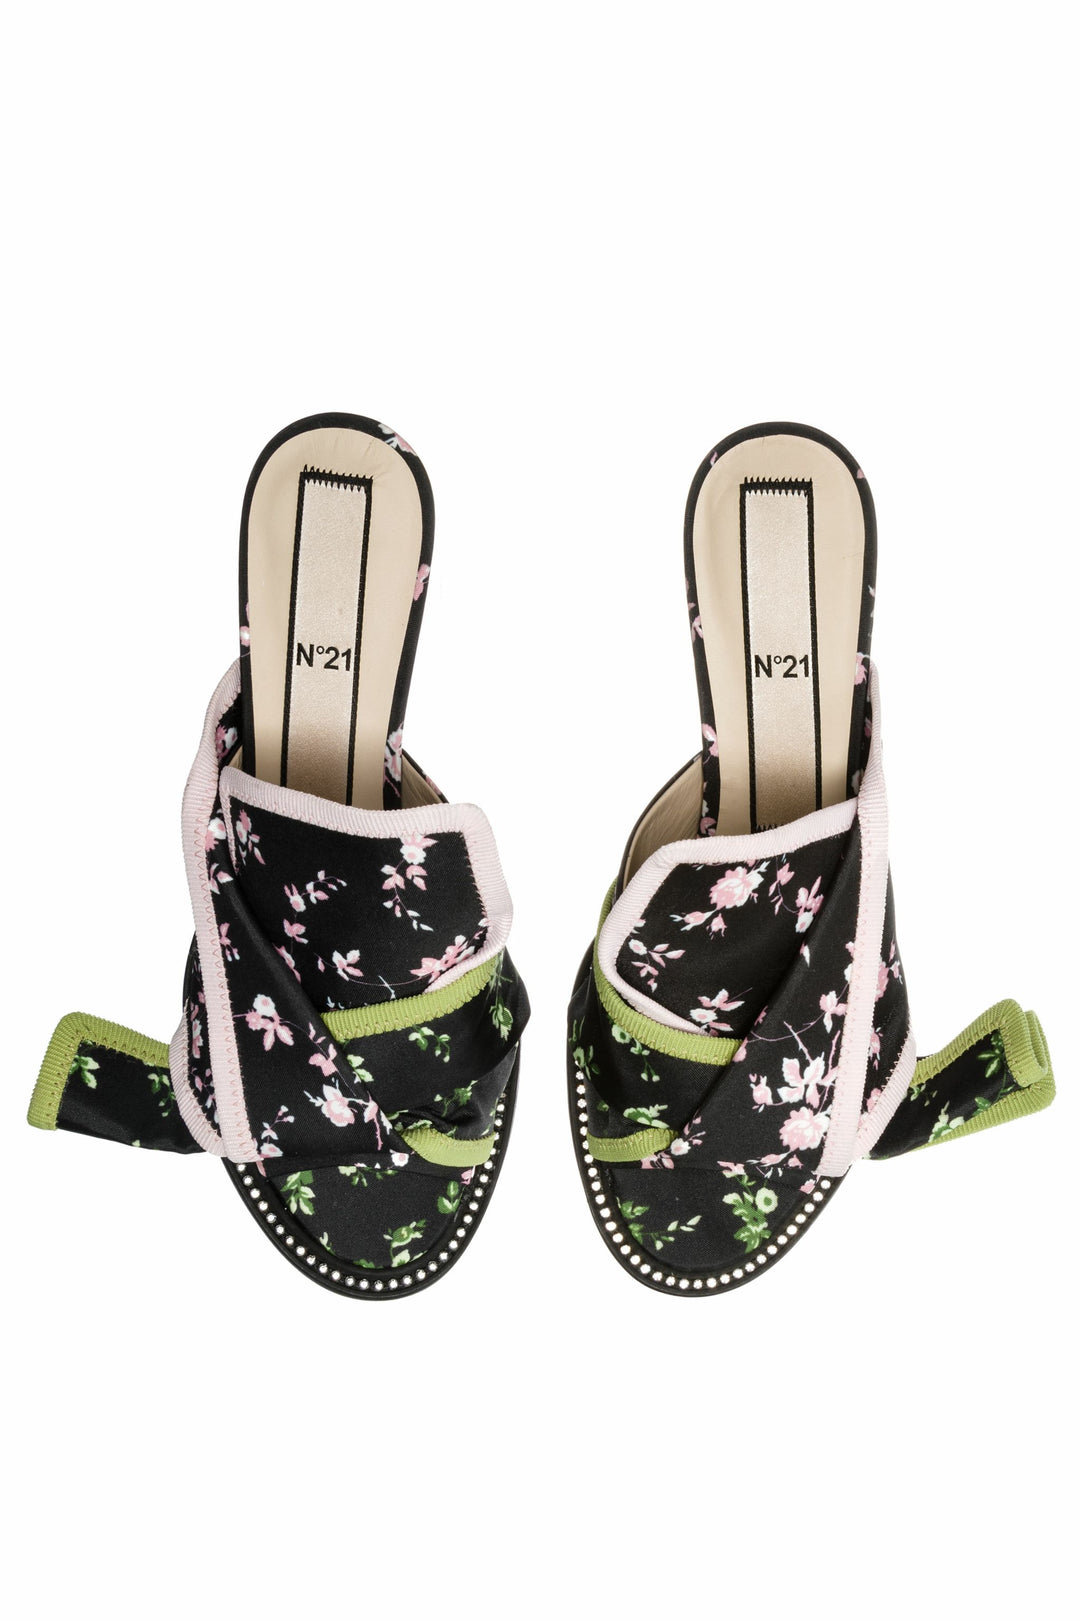 Nº21 Floral Open-Toe Sandals